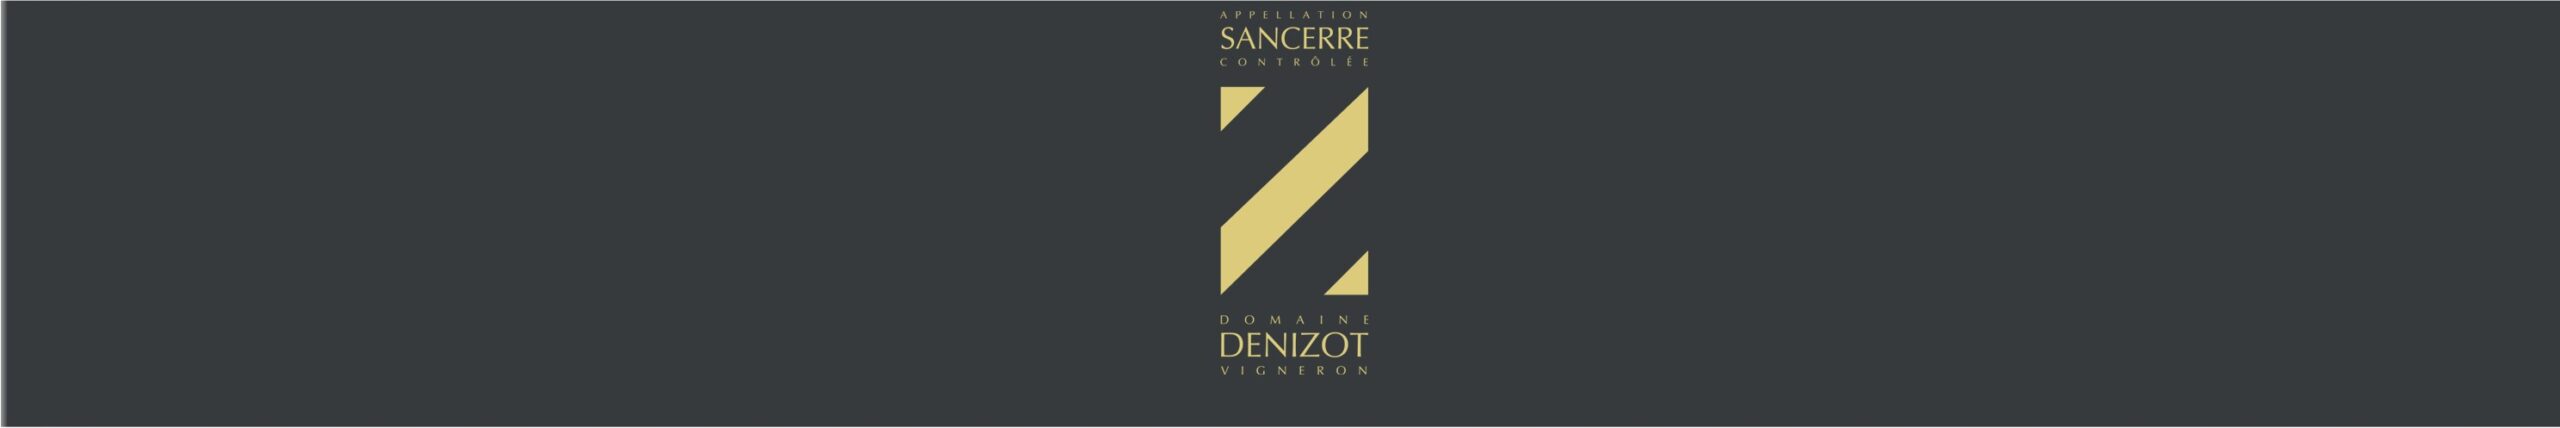 Logo Sancerre Denizot 